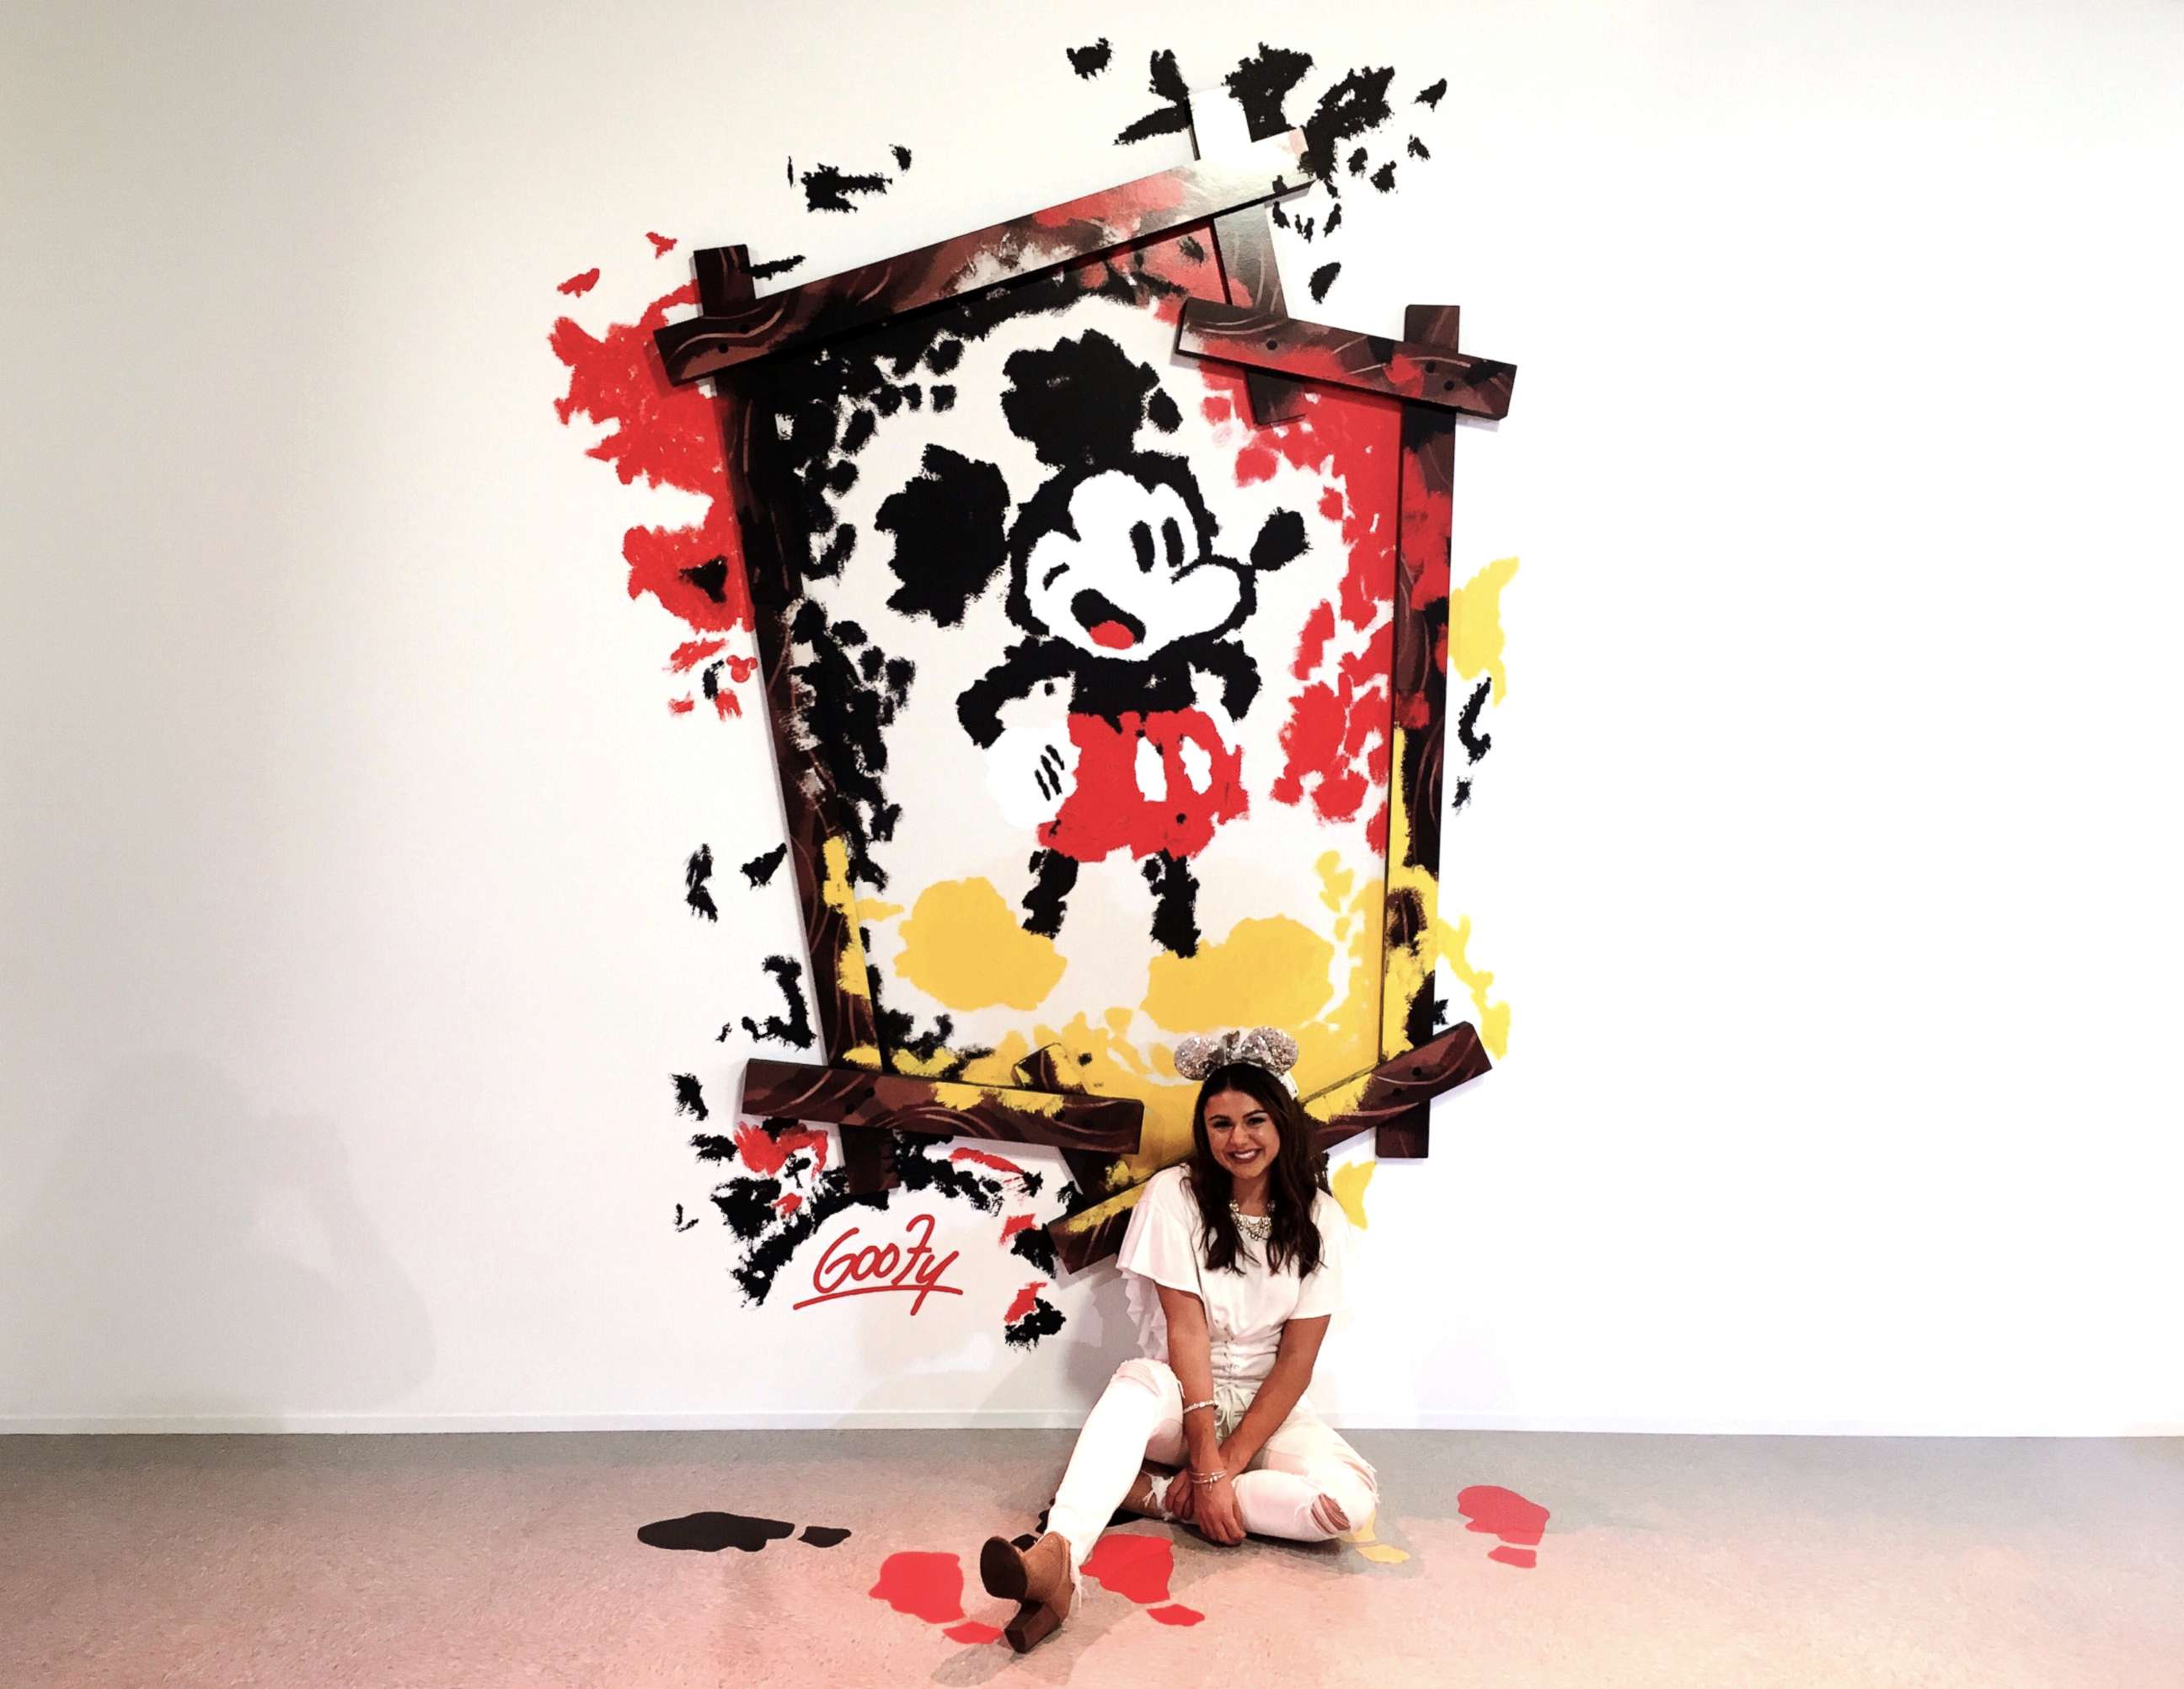 PHOTO: Goofy's art dedicated to his friend Mickey